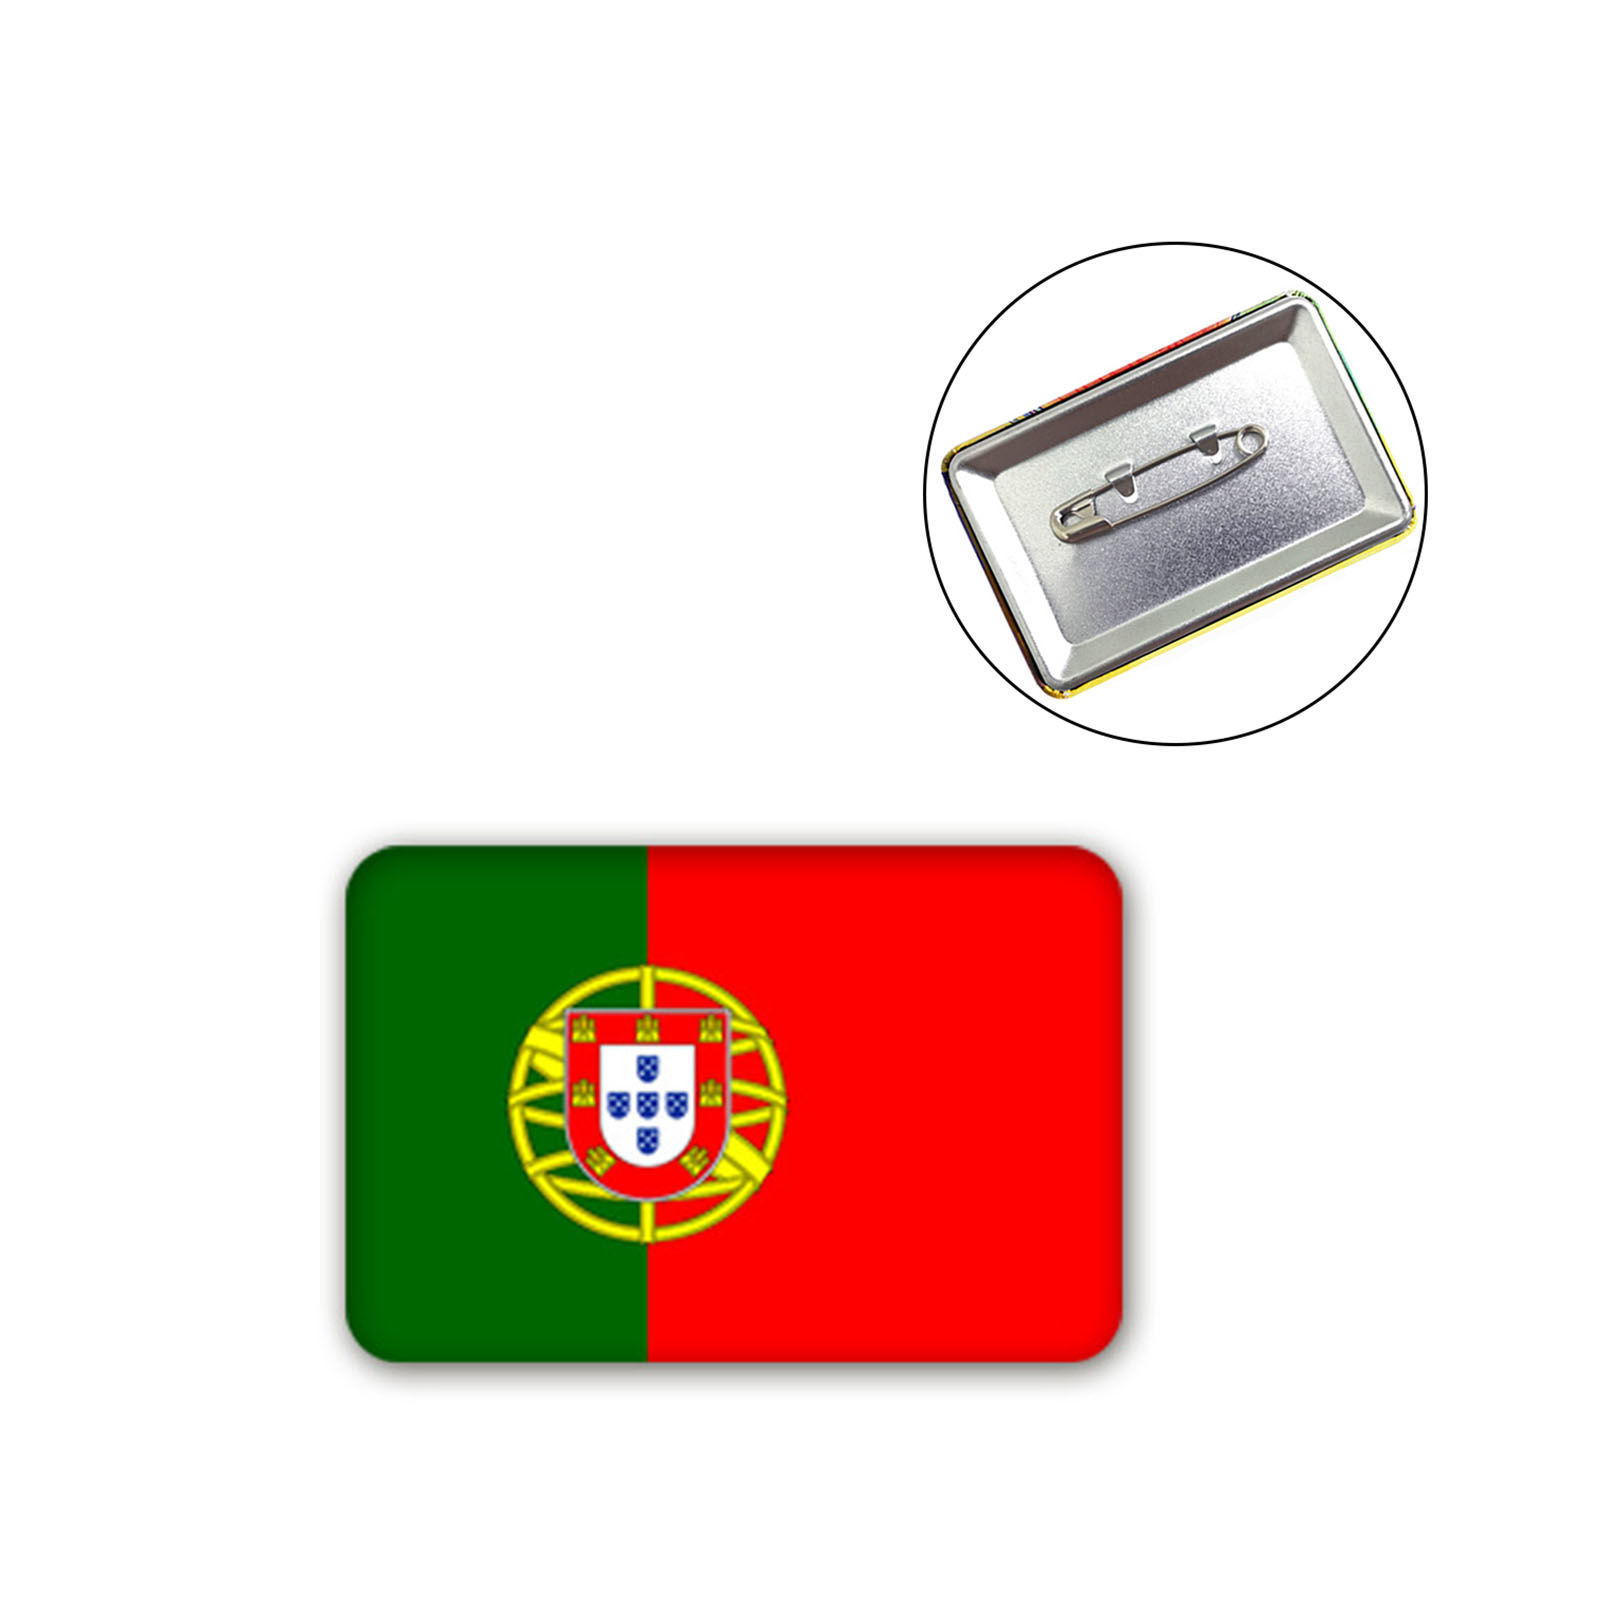 Picture of Pin Brooches Rectangle Portuguese Flag Multicolor 6cm x 4cm, 1 Piece